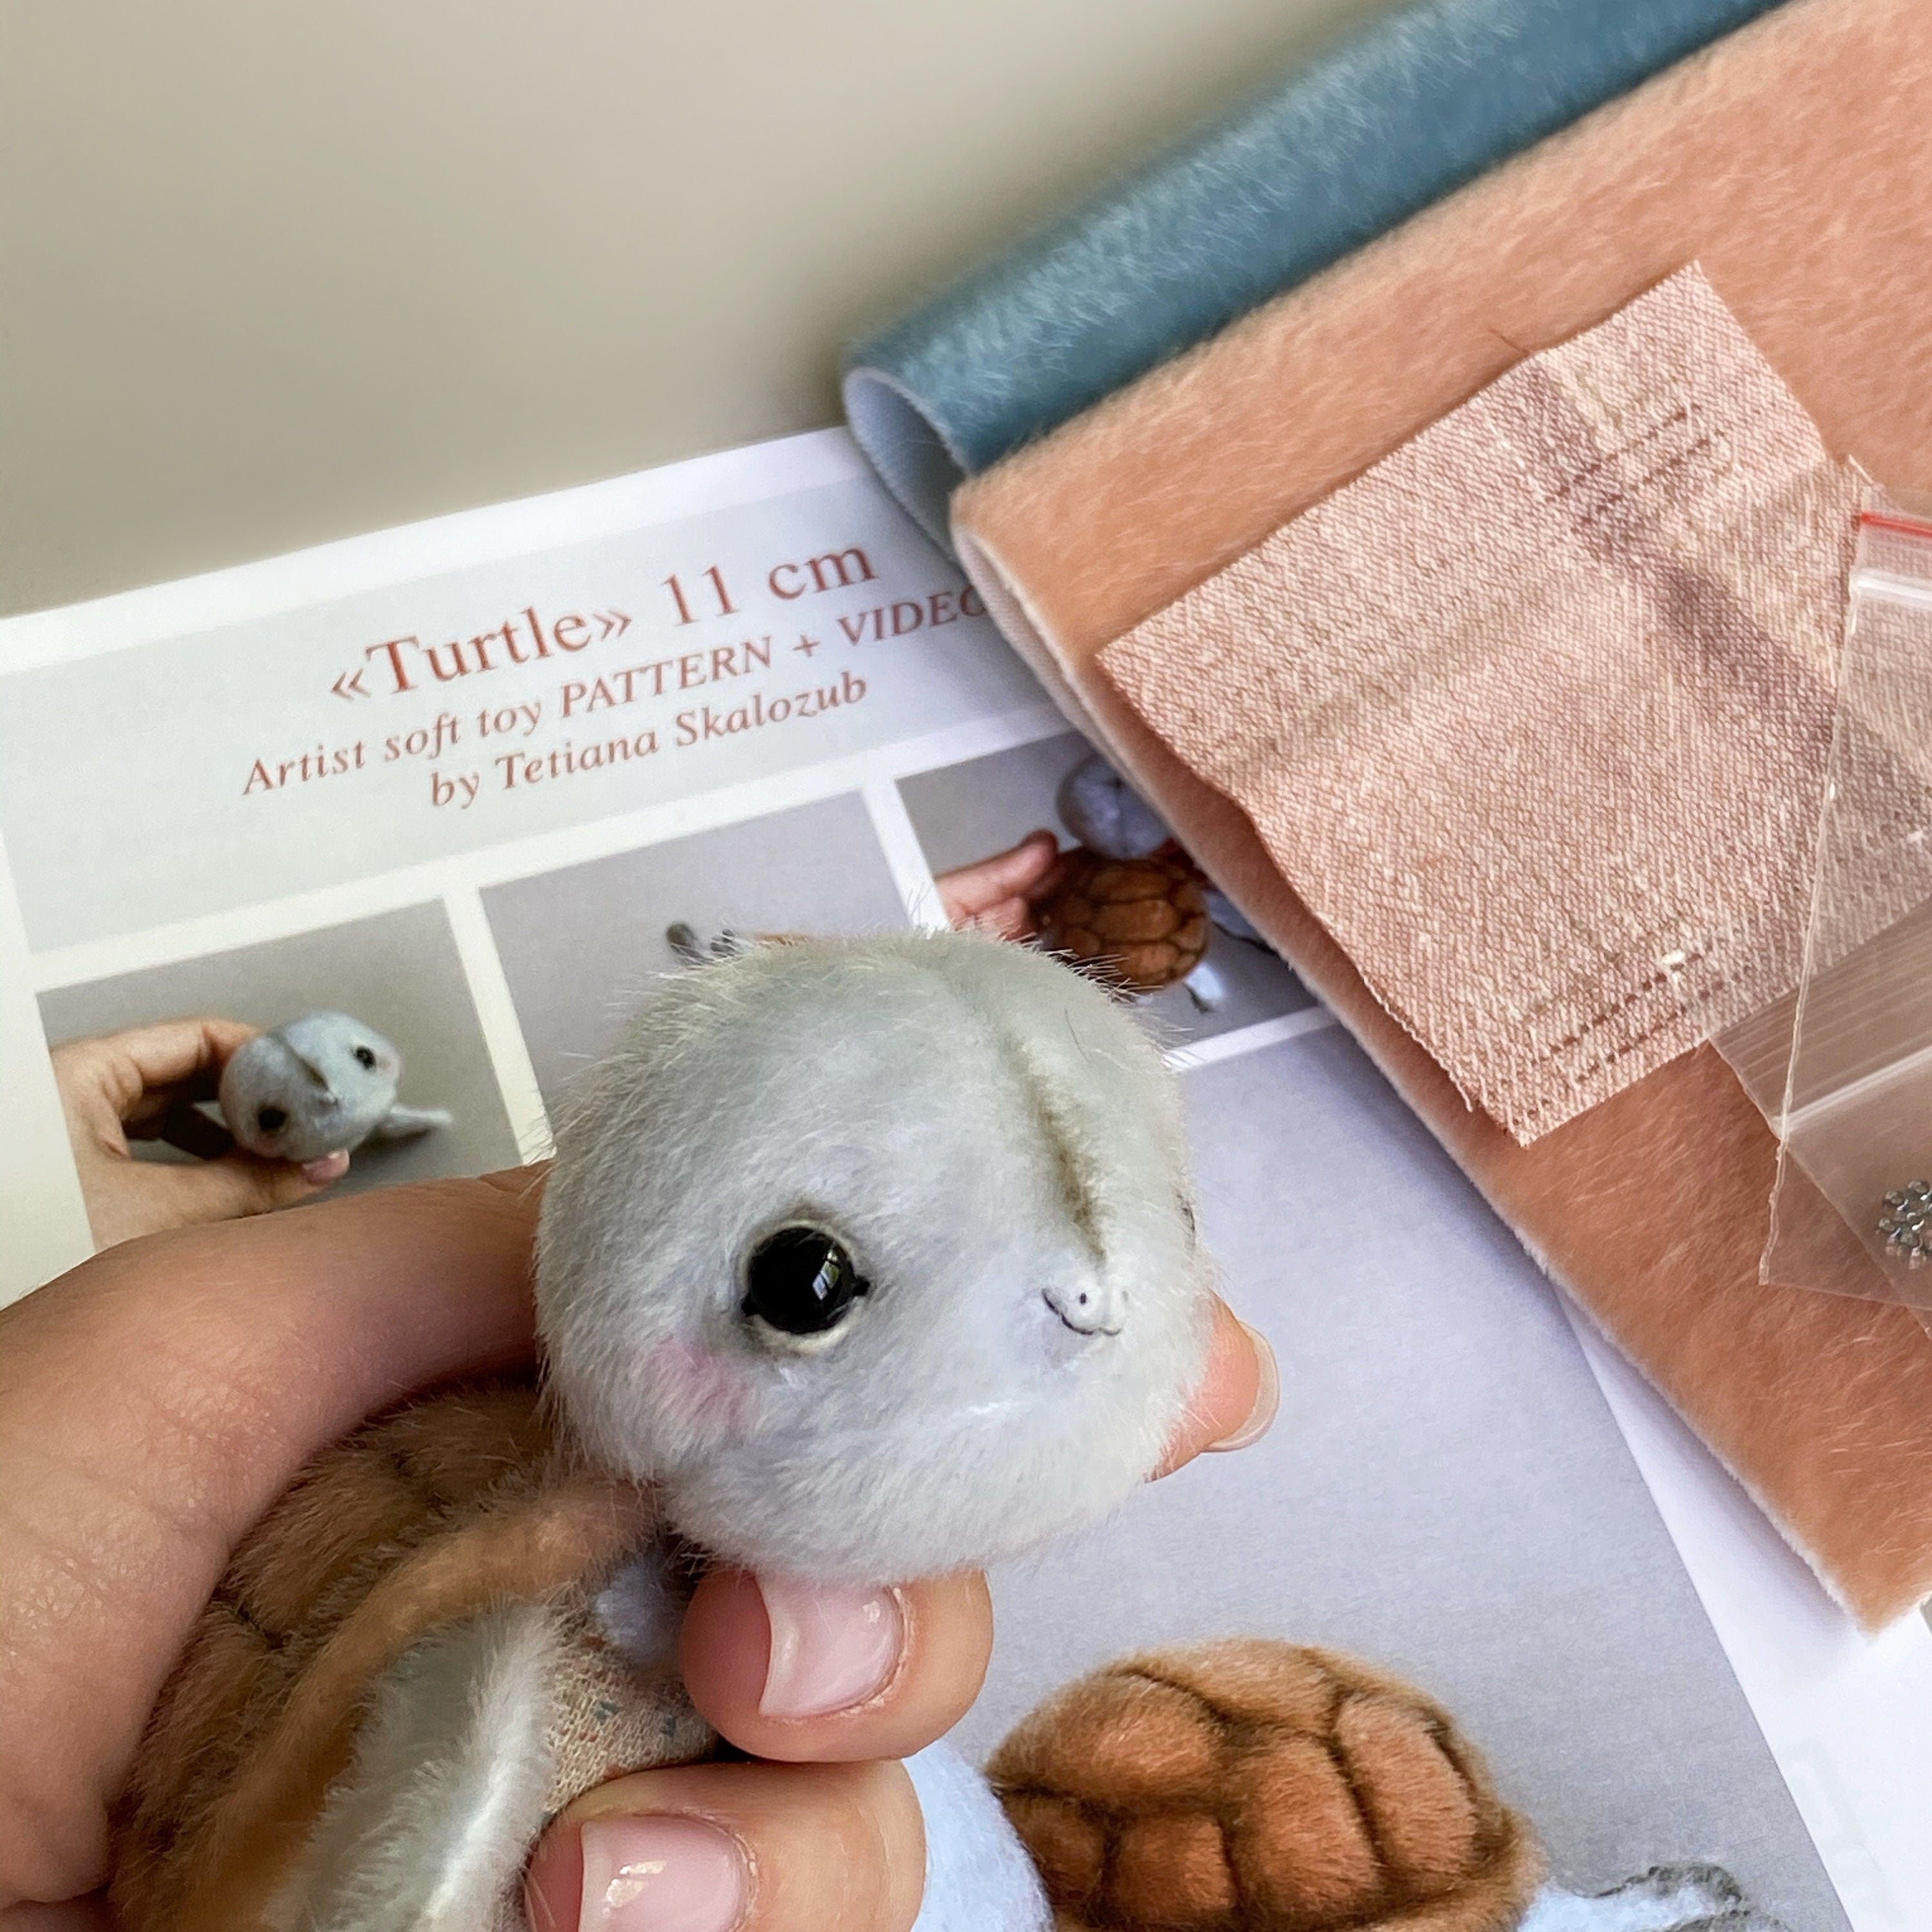 Turtle - Sewing KIT, Tortoise pattern, stuffed toy tutorials, soft toy diy, stuffed animal pattern, craft kit for adults TSminibears